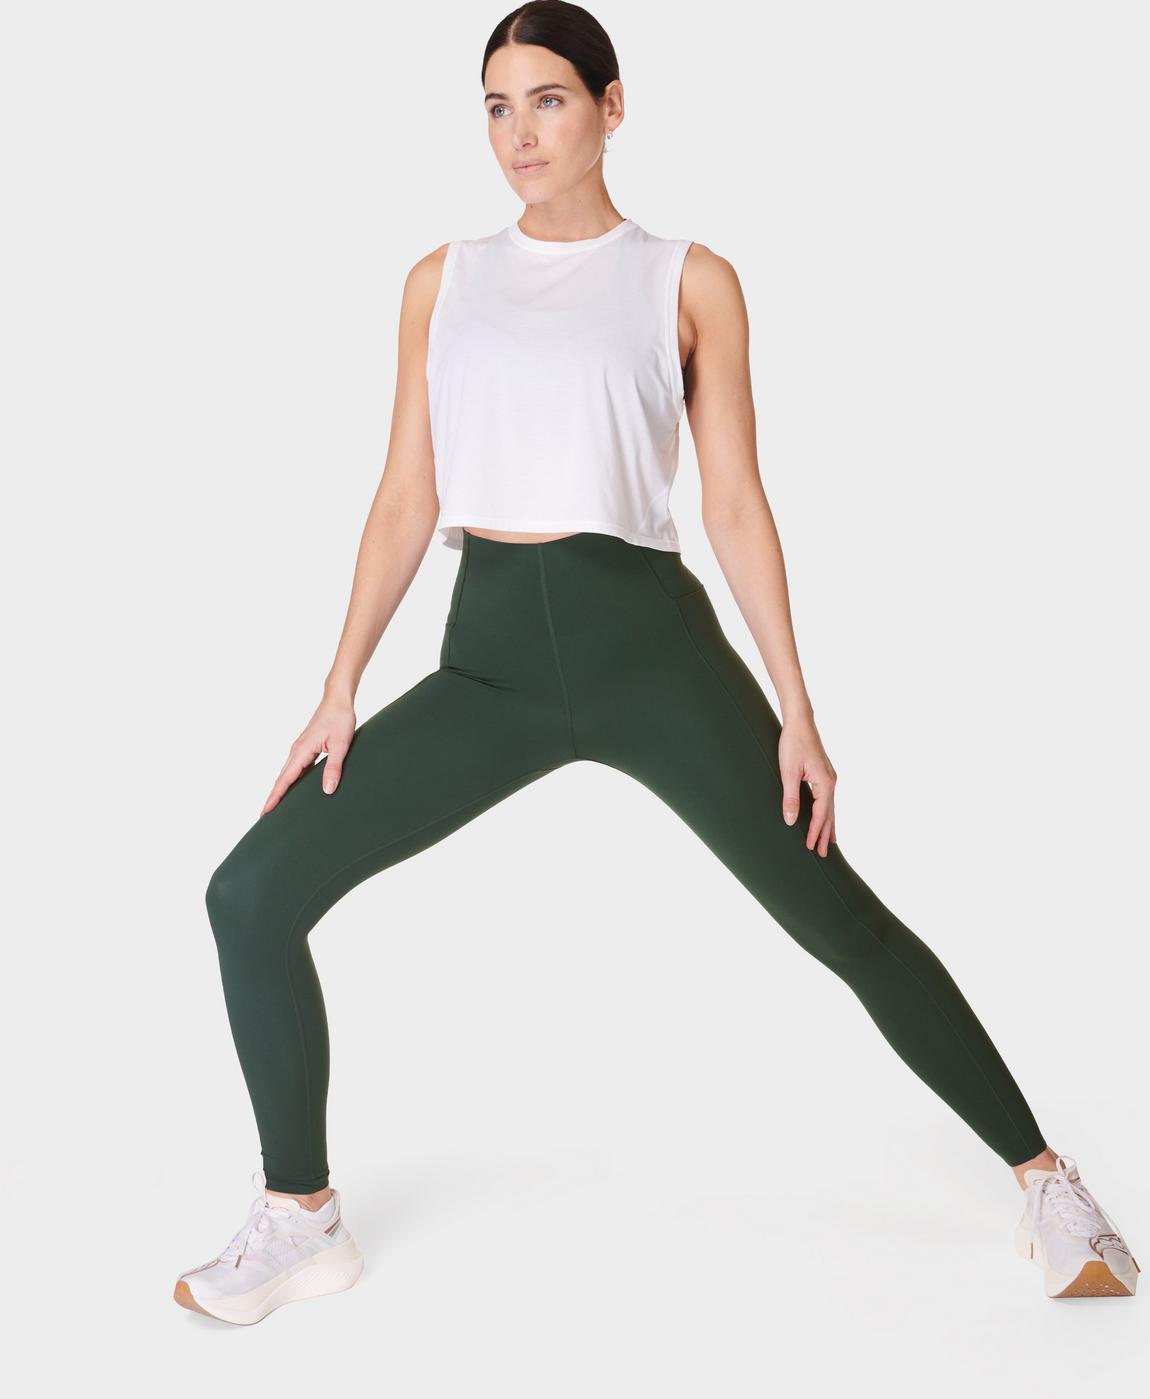  SweatyRocks Leggings Women Yoga Workout Pants High